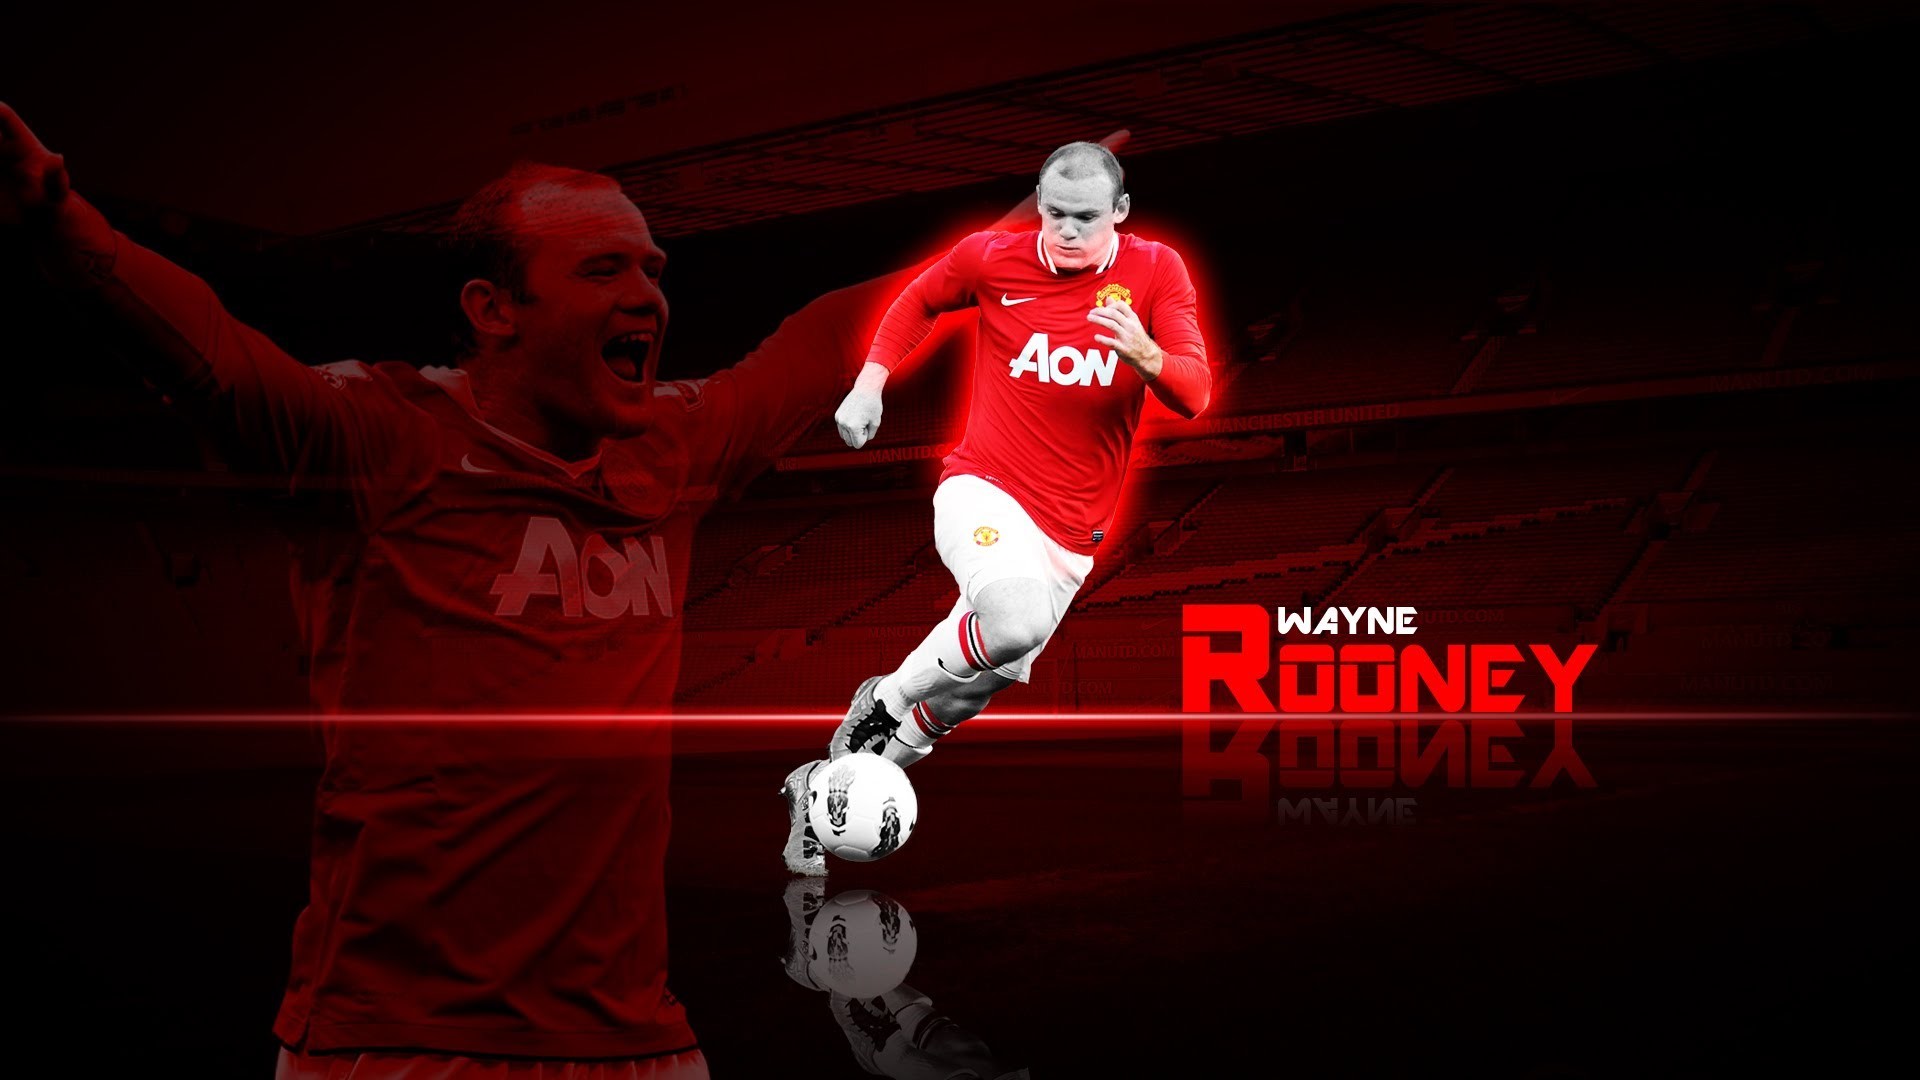 1920x1080 How to create Wayne Rooney wallpaper in AdobeÂ® PhotoshopÂ® software - YouTube